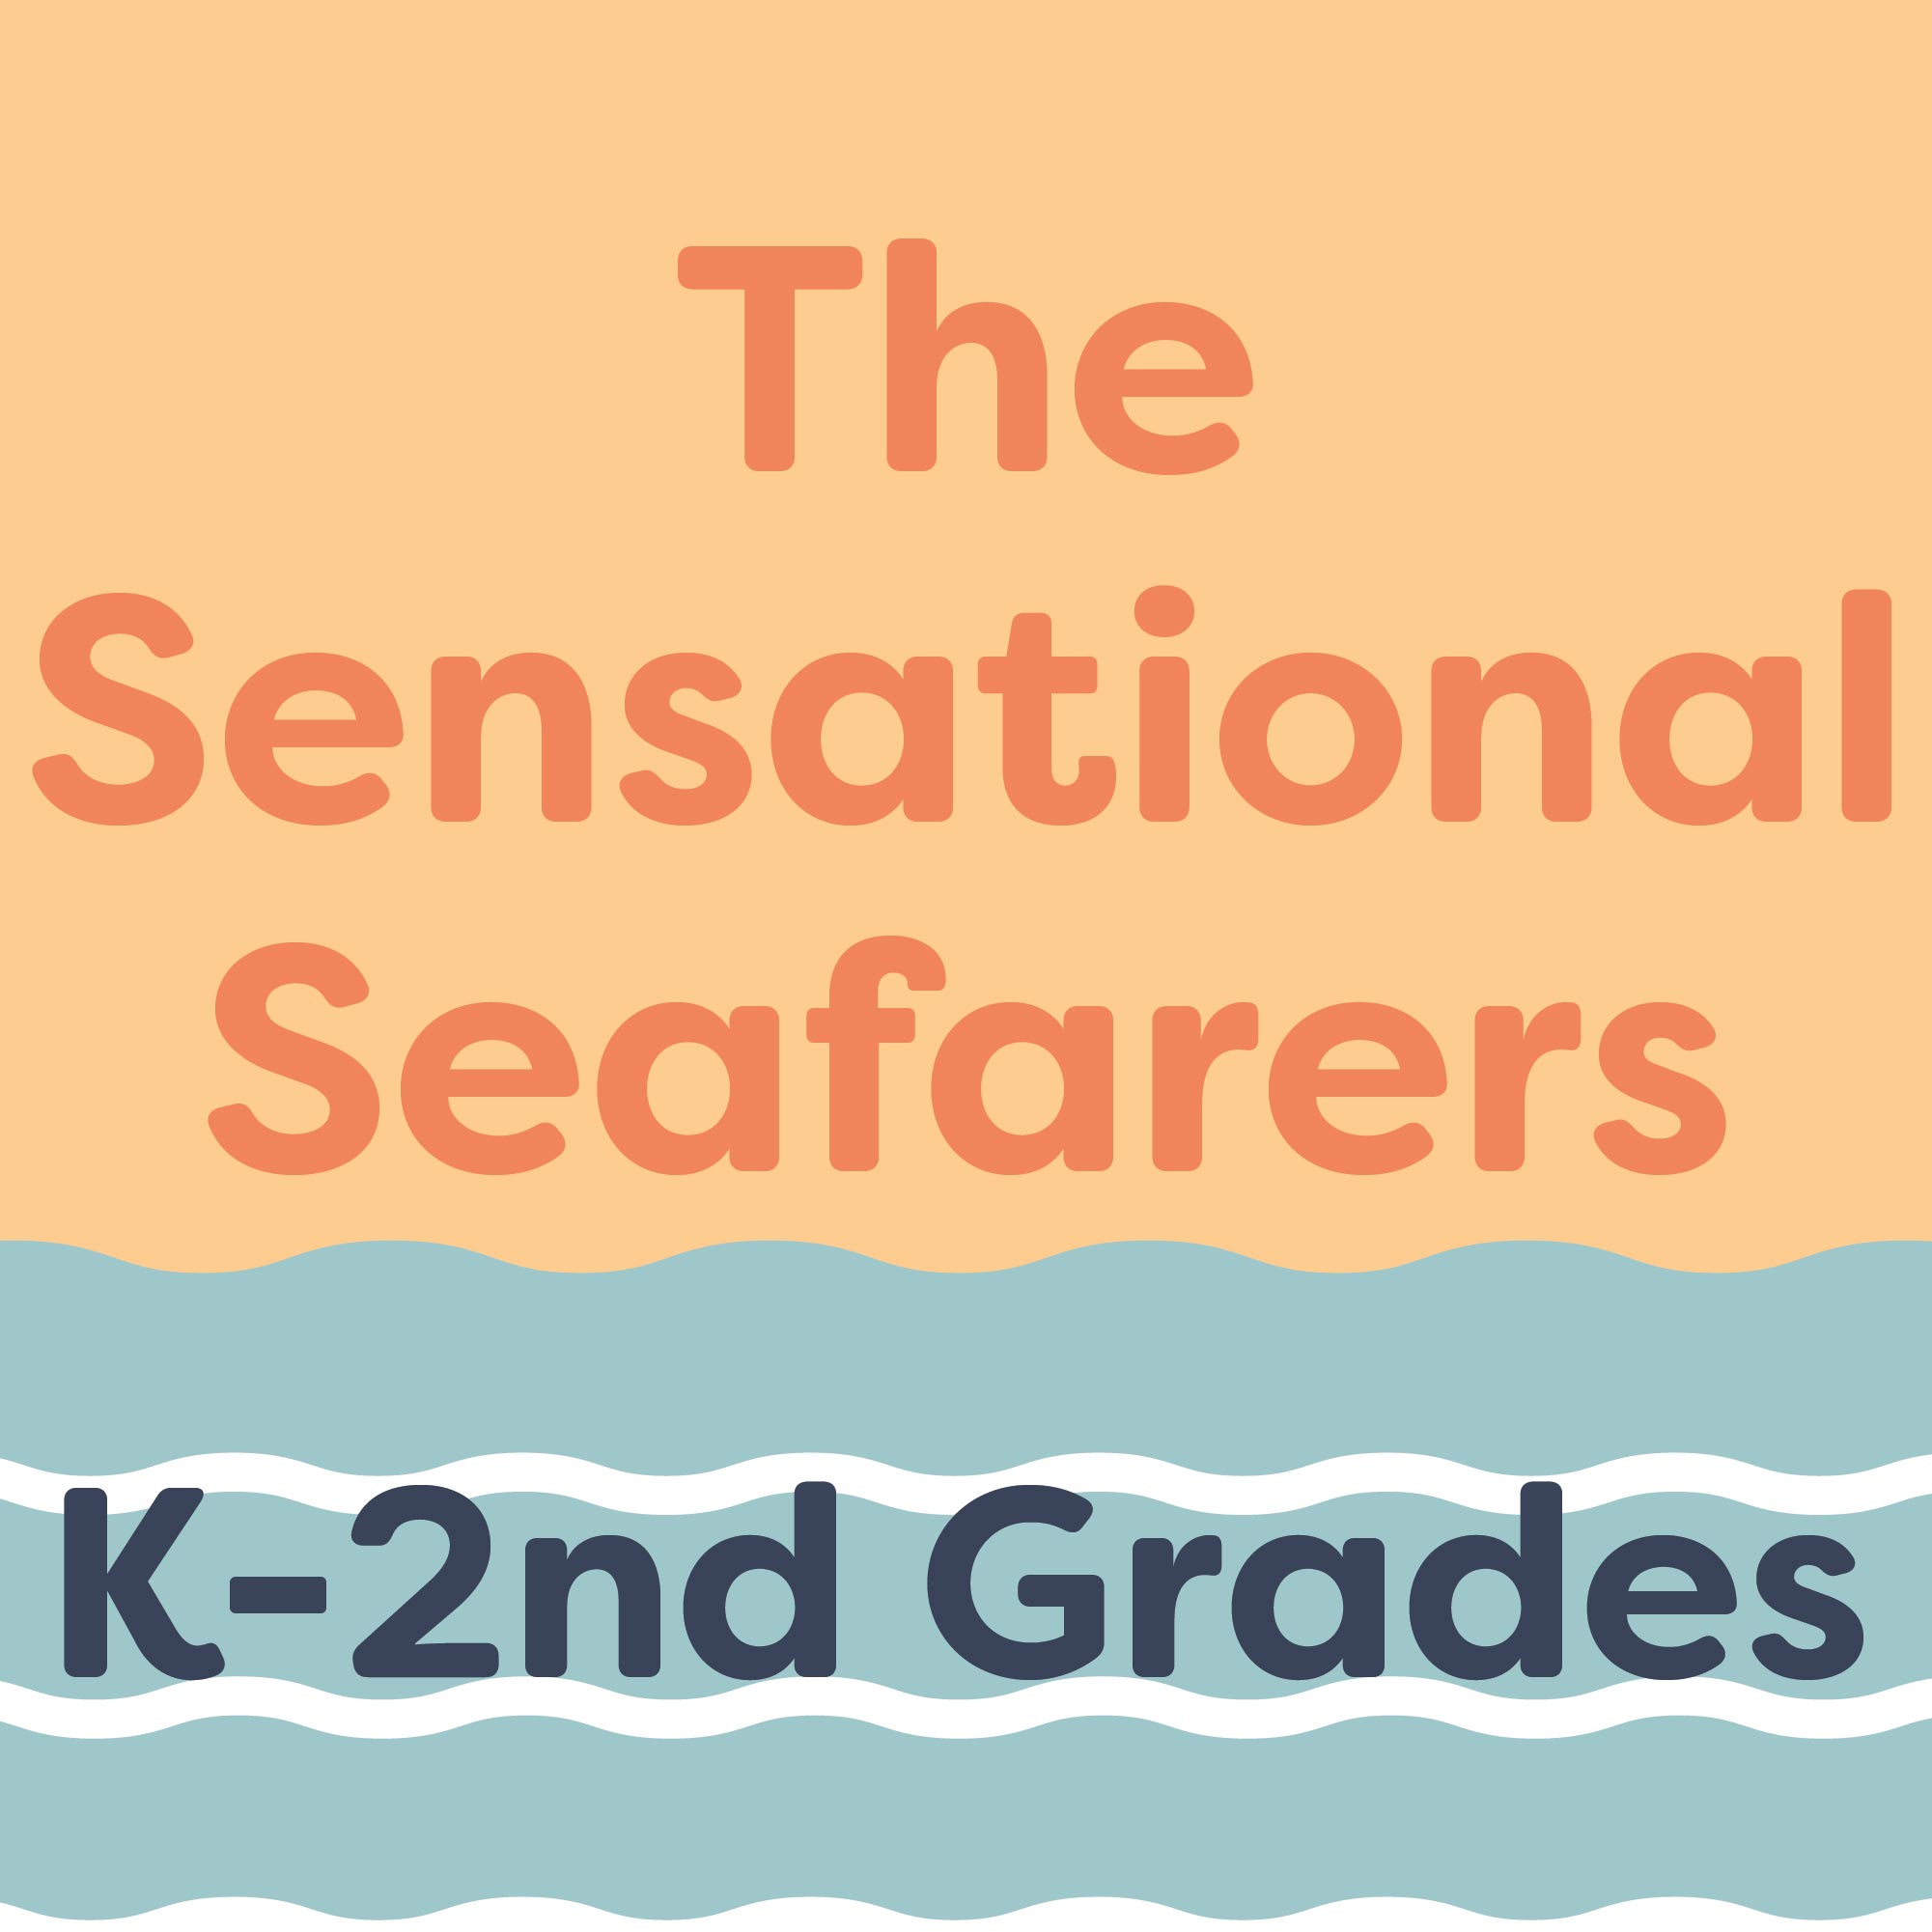 Sensational Seafarers